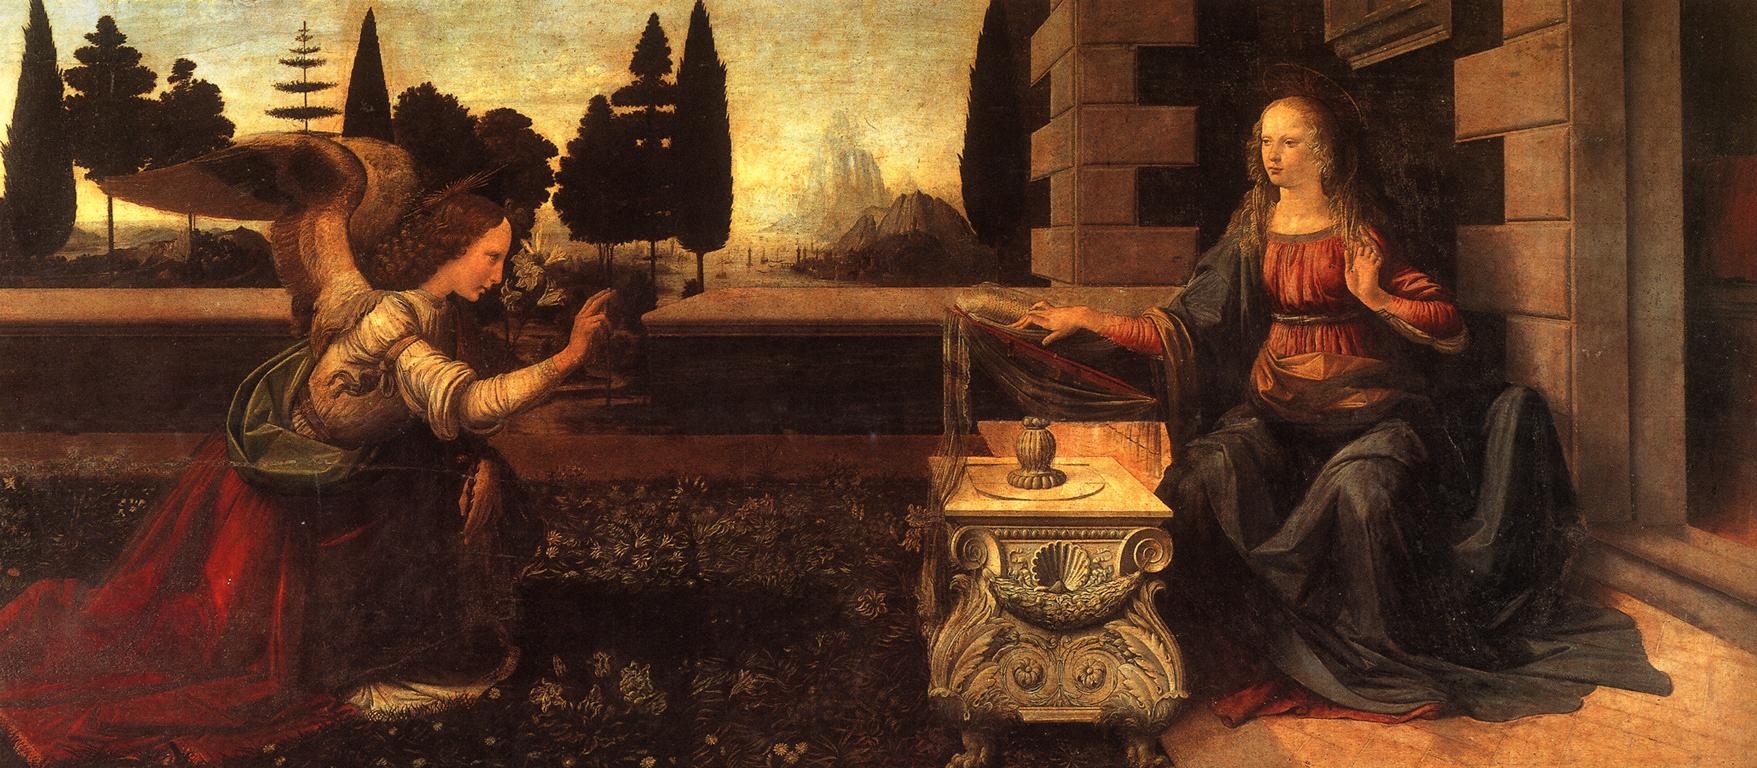 La Anunciación by Leonardo da Vinci - c. 1472 Galleria degli Uffizi